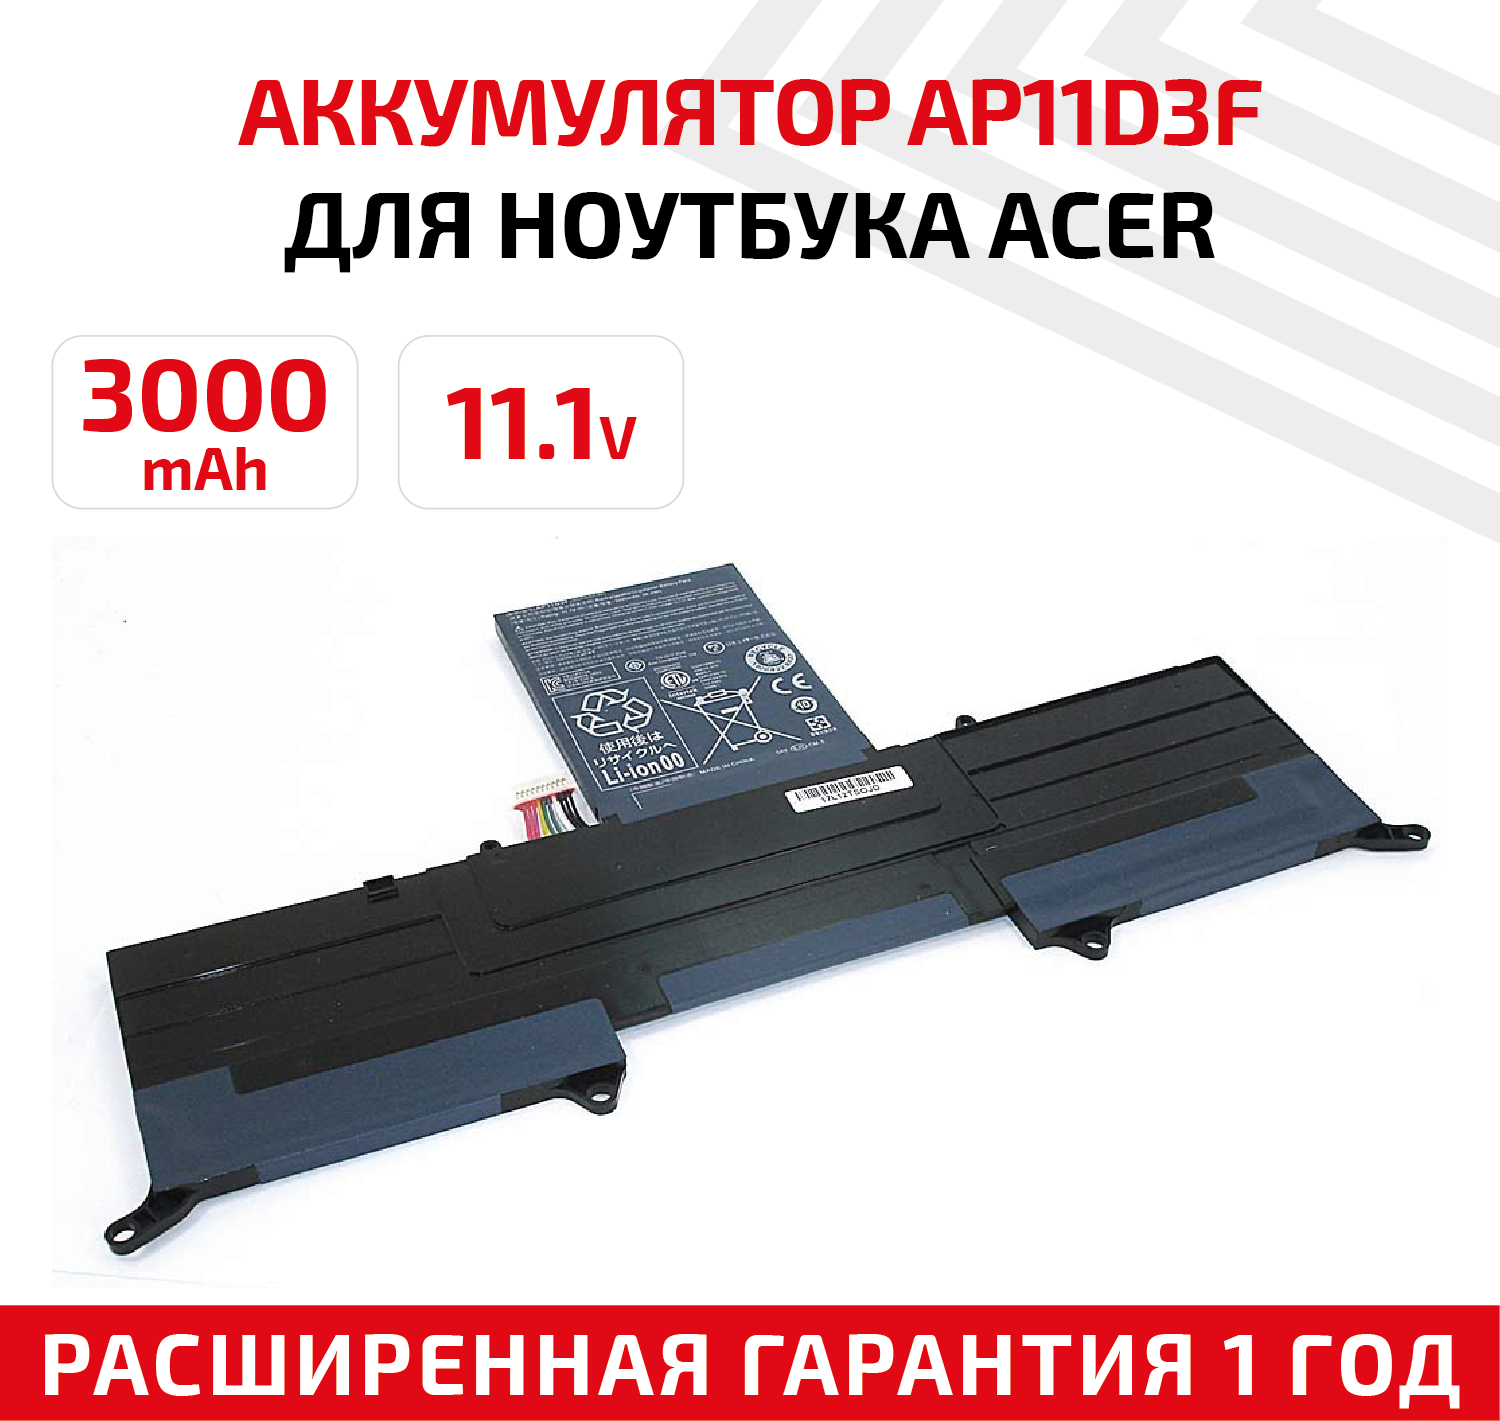 Аккумулятор (АКБ, аккумуляторная батарея) AP11D3F для ноутбука Acer Aspire S3-951, 11.1В, 3000мАч, Li-Ion